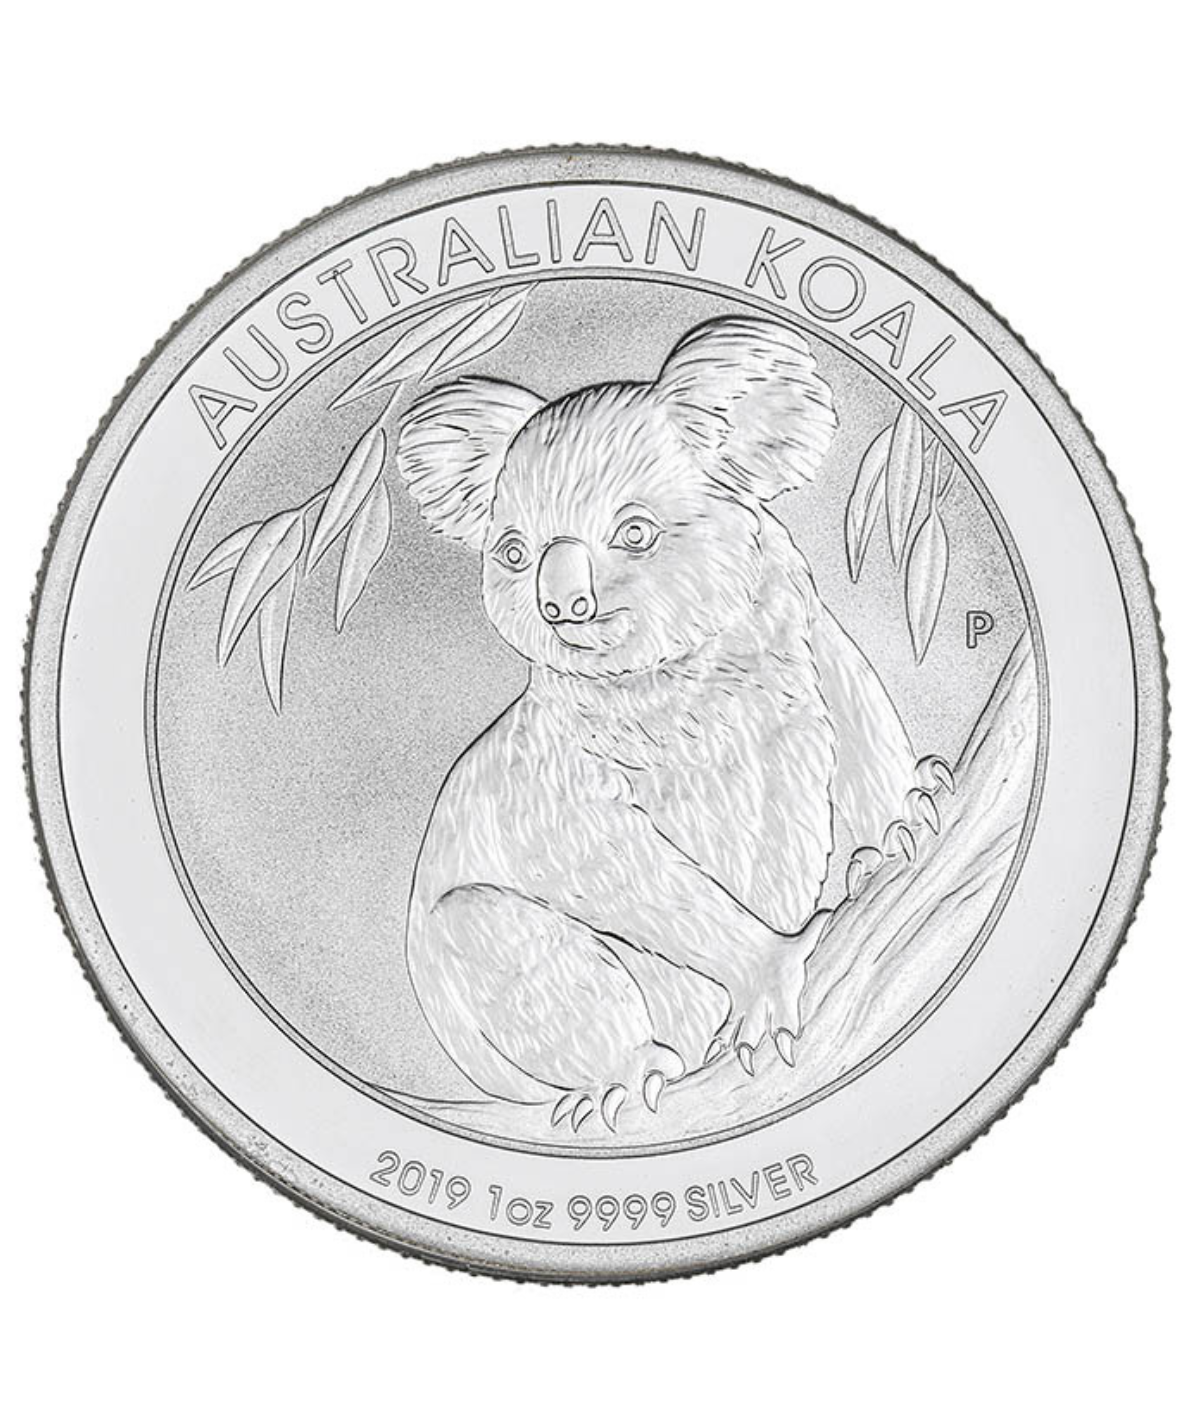 Perpectiva frontal de la cruz de la moneda de plata Koala de 2019 de 1 onza